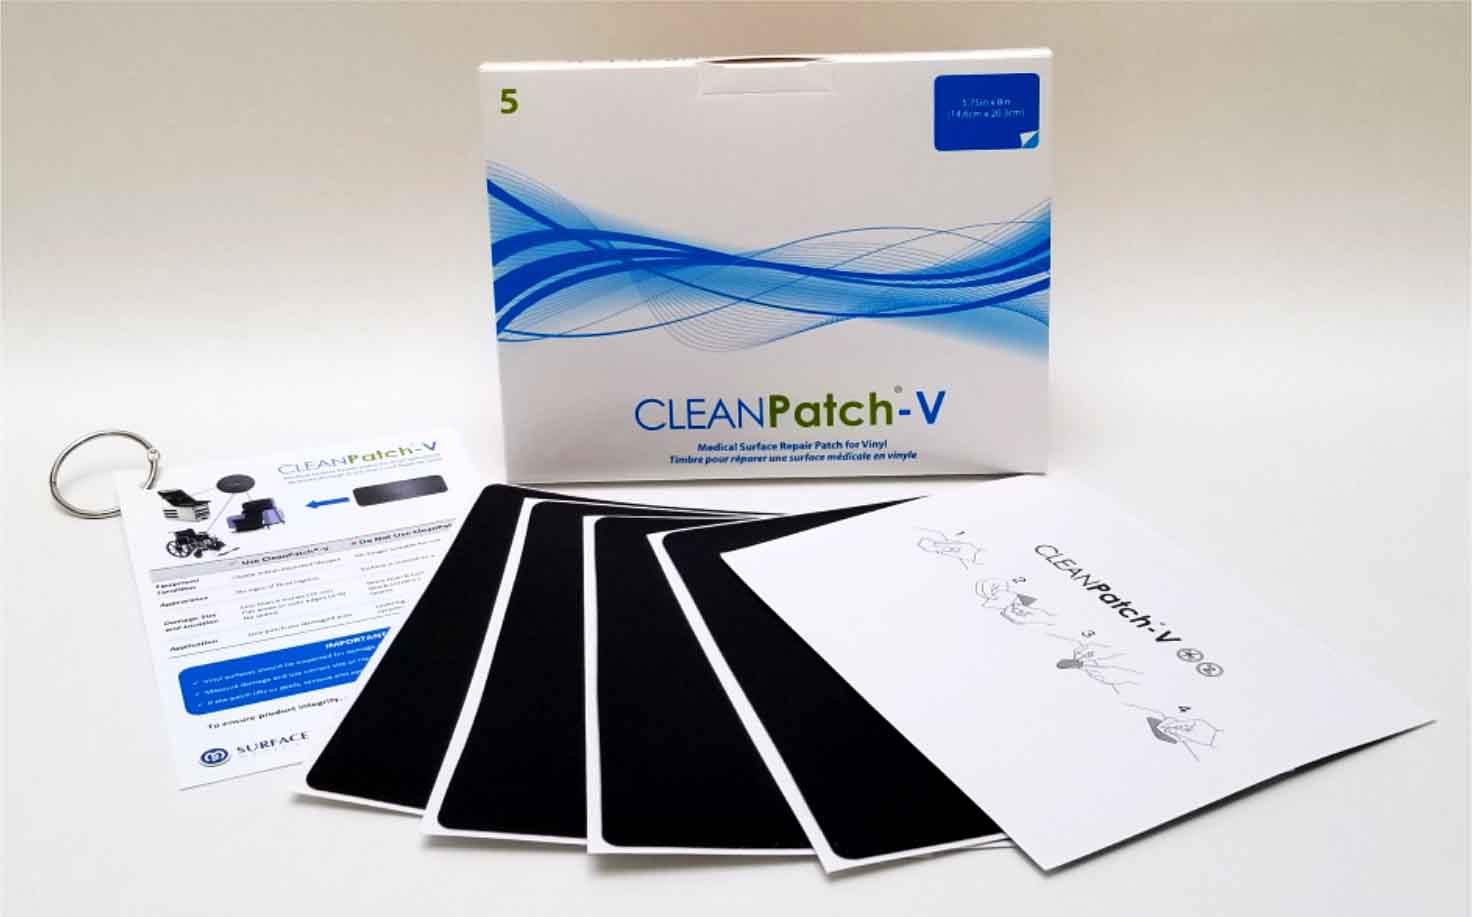 CleanPatch-V For Vinyl Surfaces, Large, 5.75" x 8" rectangle (14.6*20.3 cm), 5/box